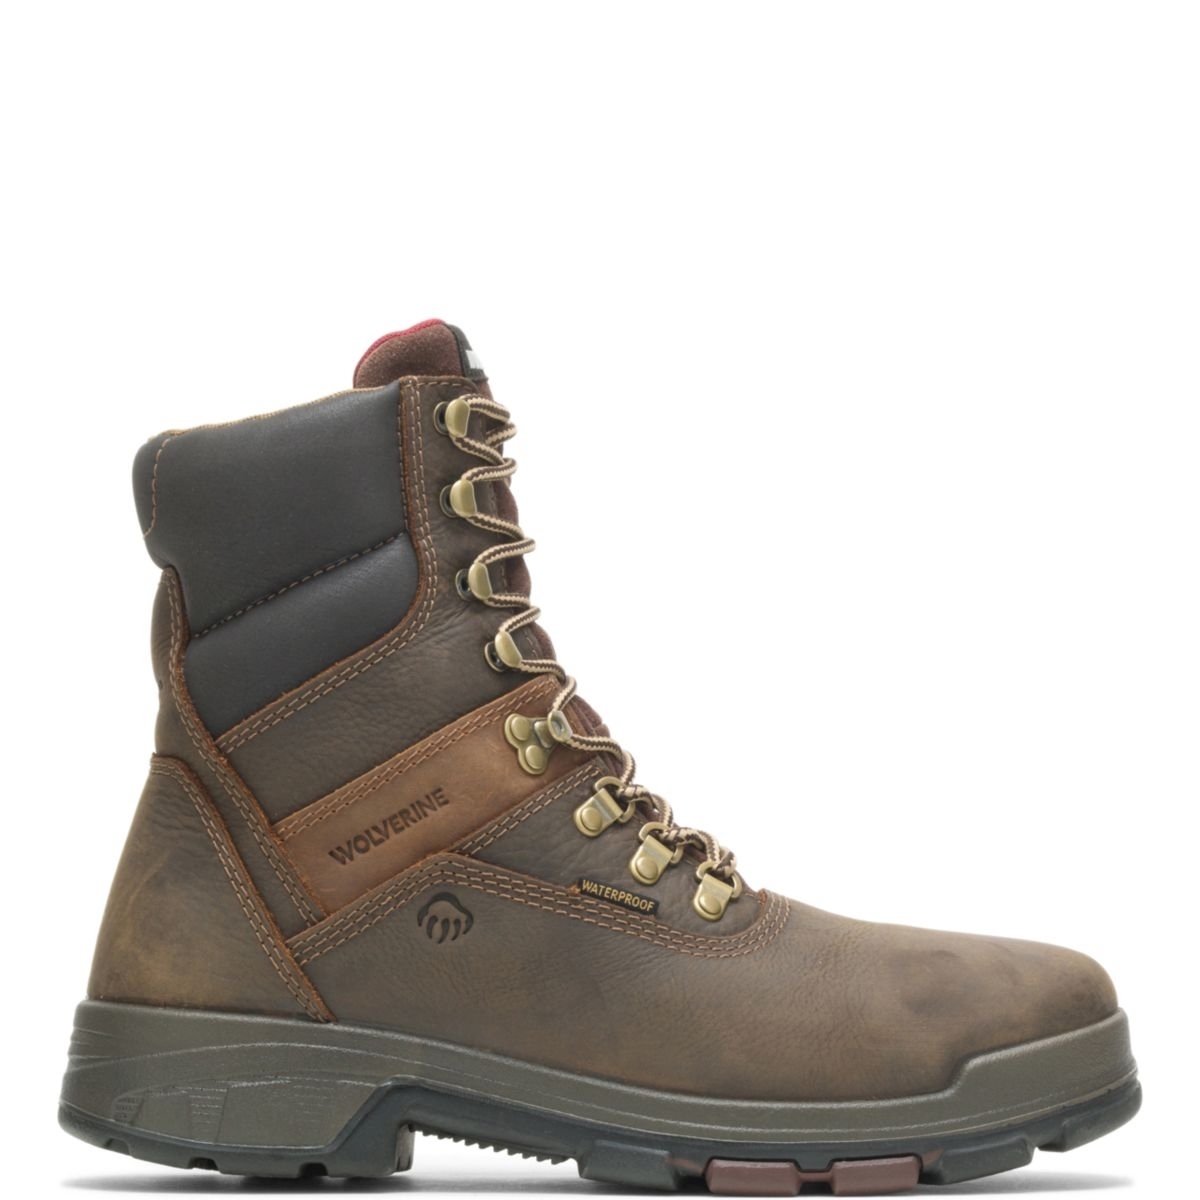 WOLVERINE Men's Cabor EPXÂ® 8 Waterproof Composite Toe Work Boot Dark Brown - W10316 BROWN - BROWN, 10.5-D